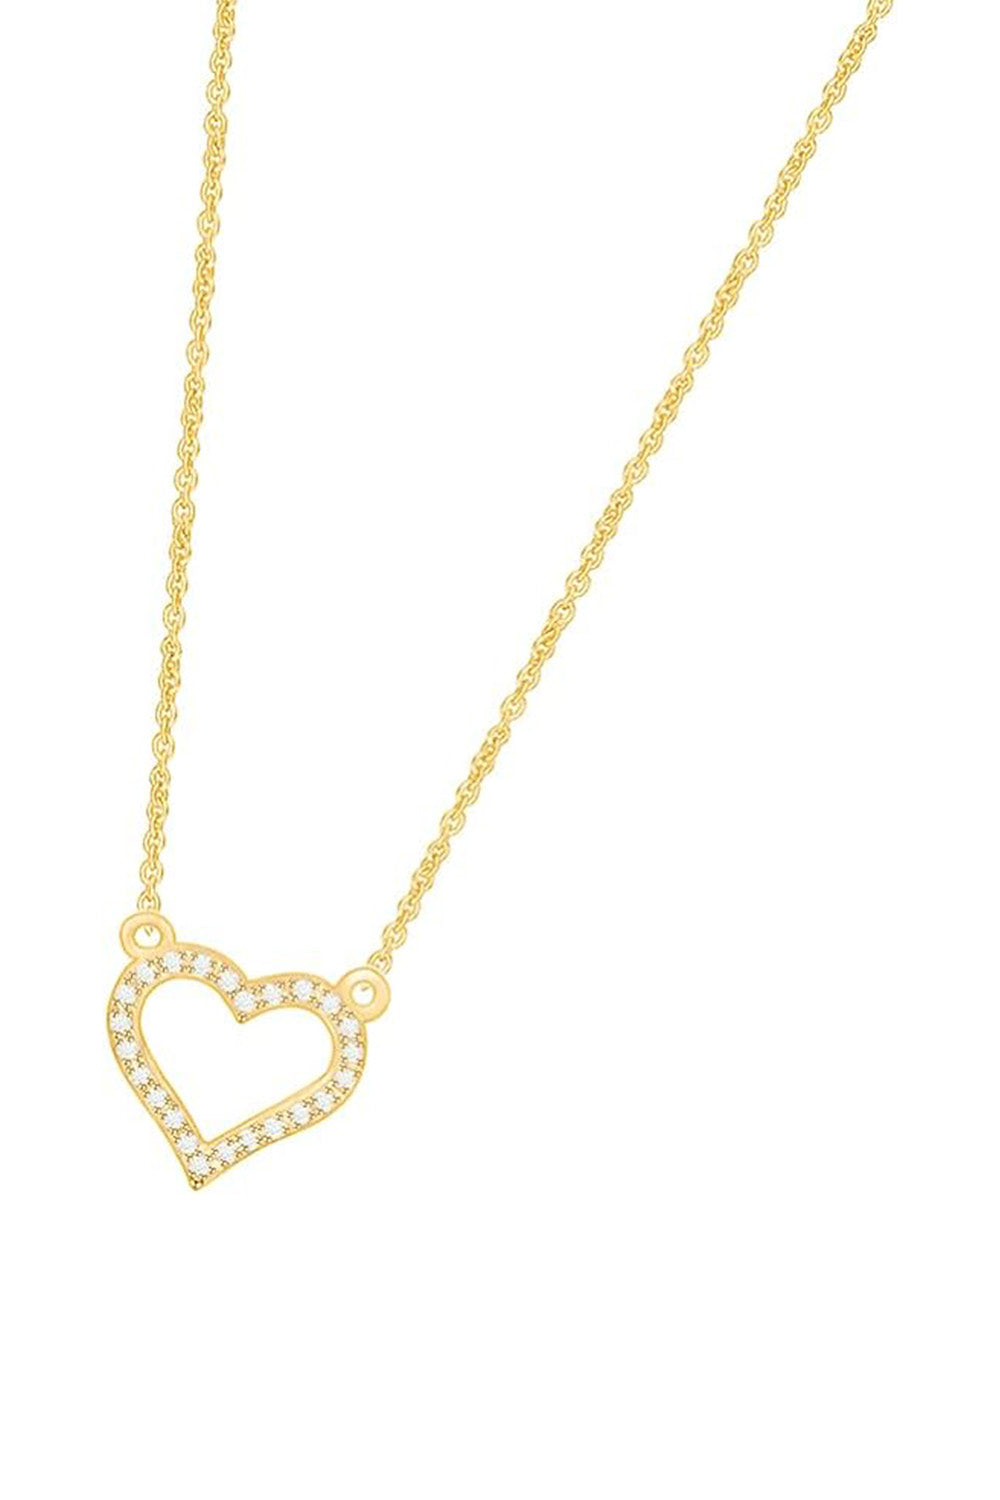 Yellow Gold Color Open Heart Pendant Necklace, Pendant For Women